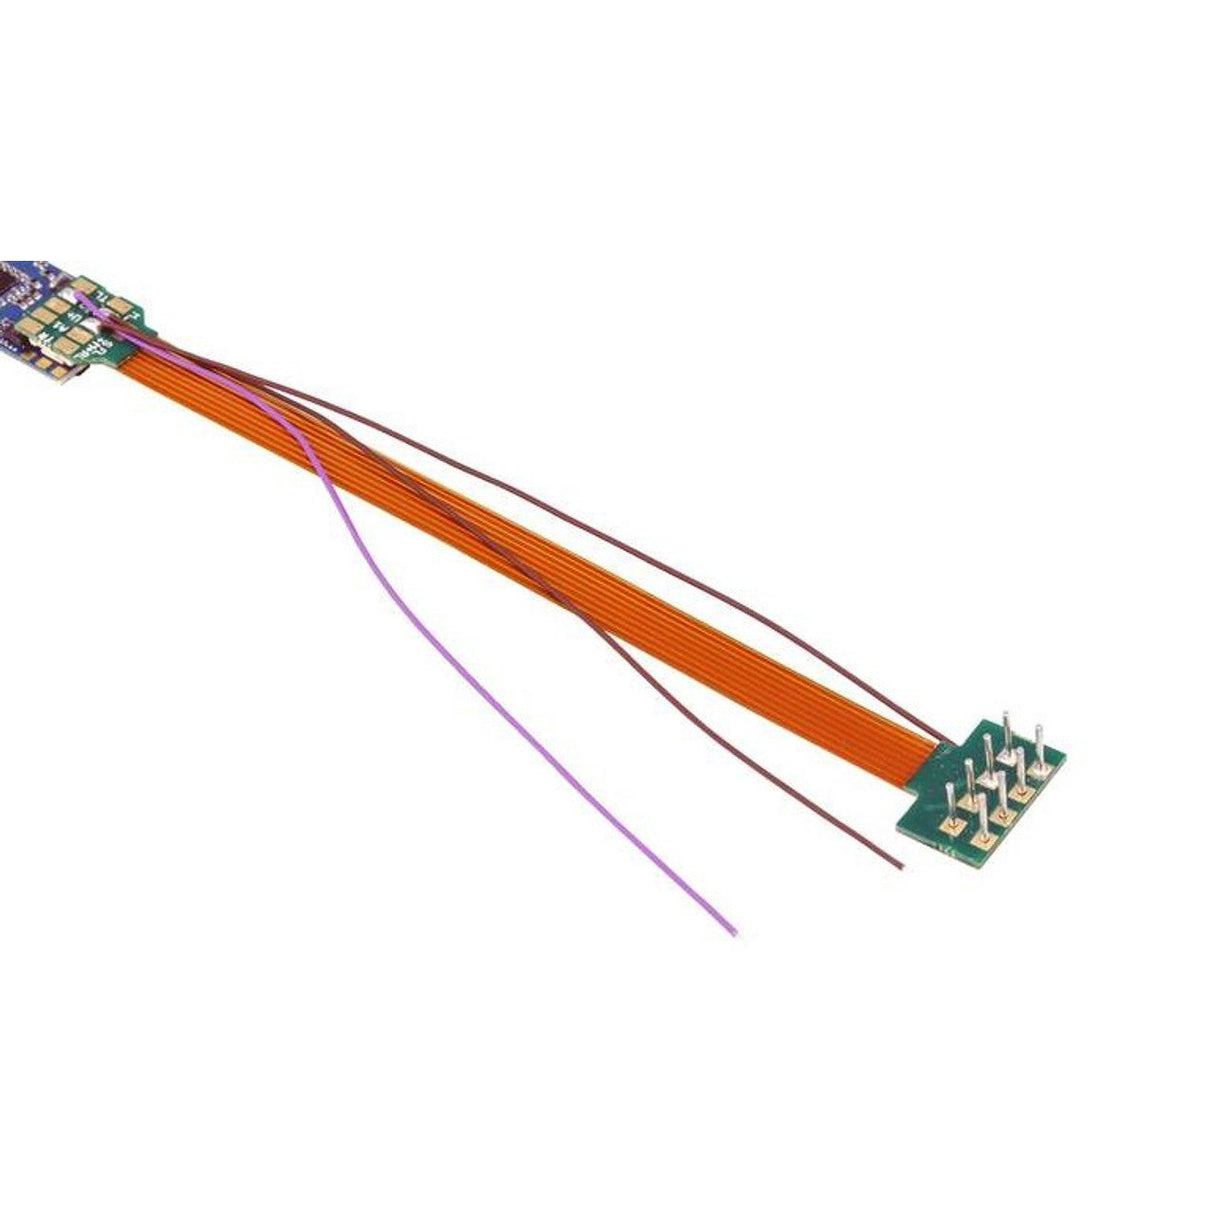 ESU adapter board, 18-pin Next-18 socket to NEM652 8-pin, Flex, 88mm, with heat shrink tube